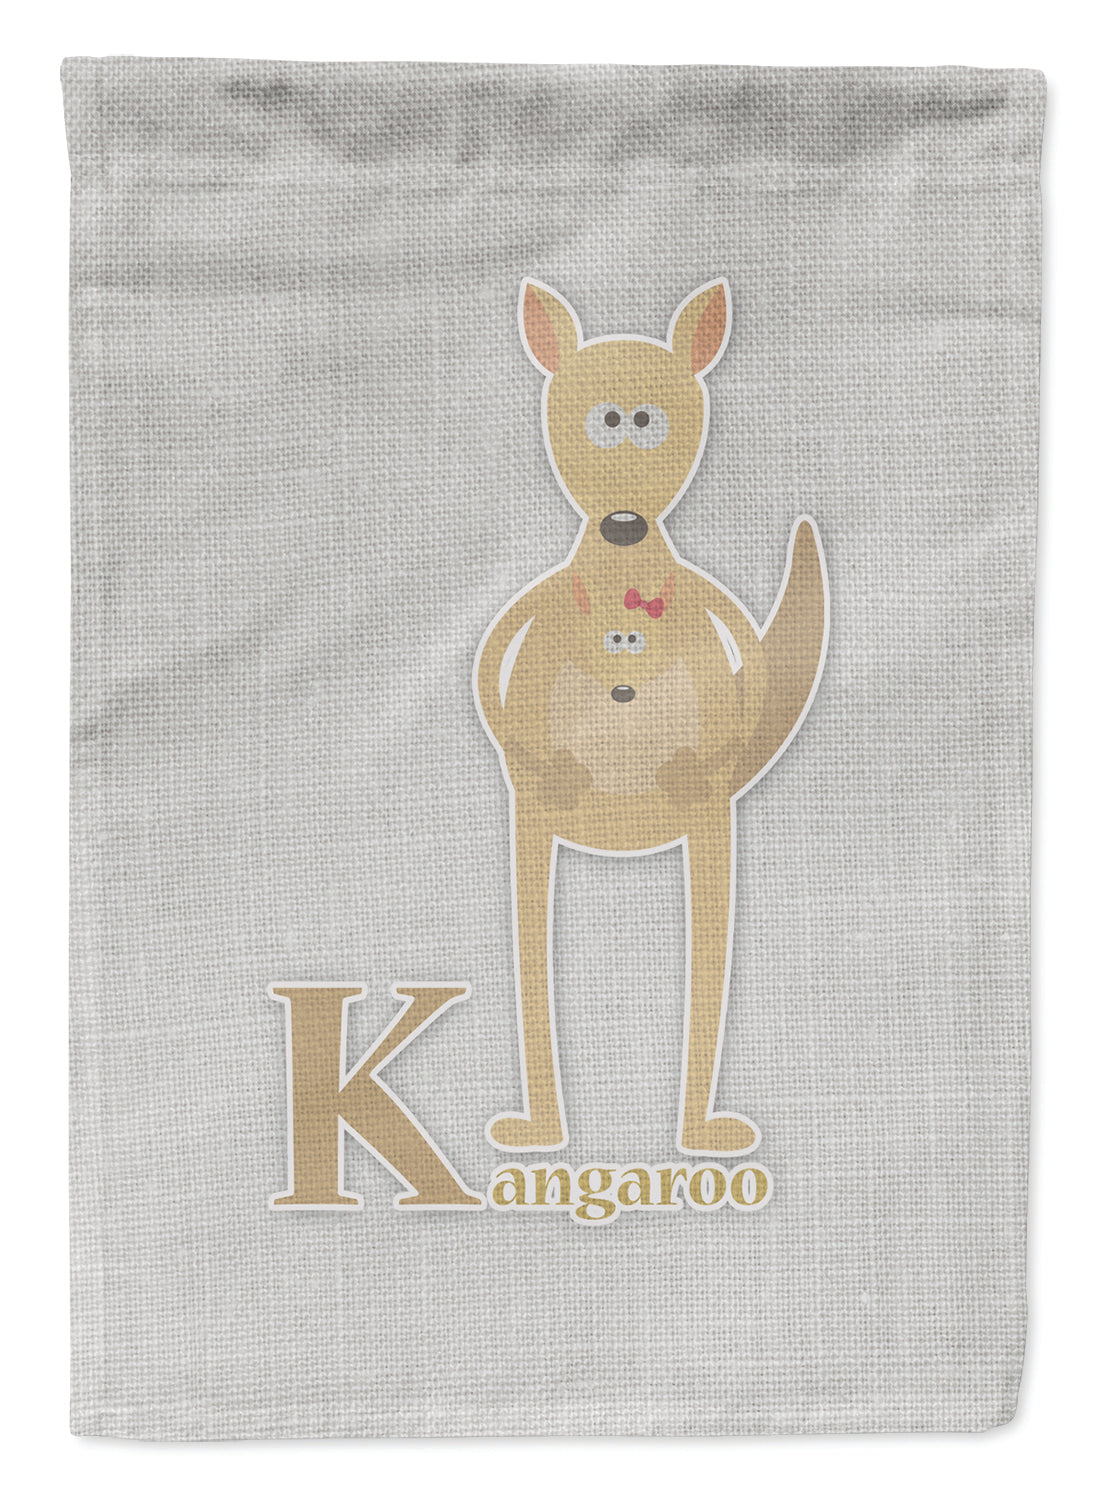 Alphabet K for Kangaroo Flag Garden Size BB5736GF  the-store.com.